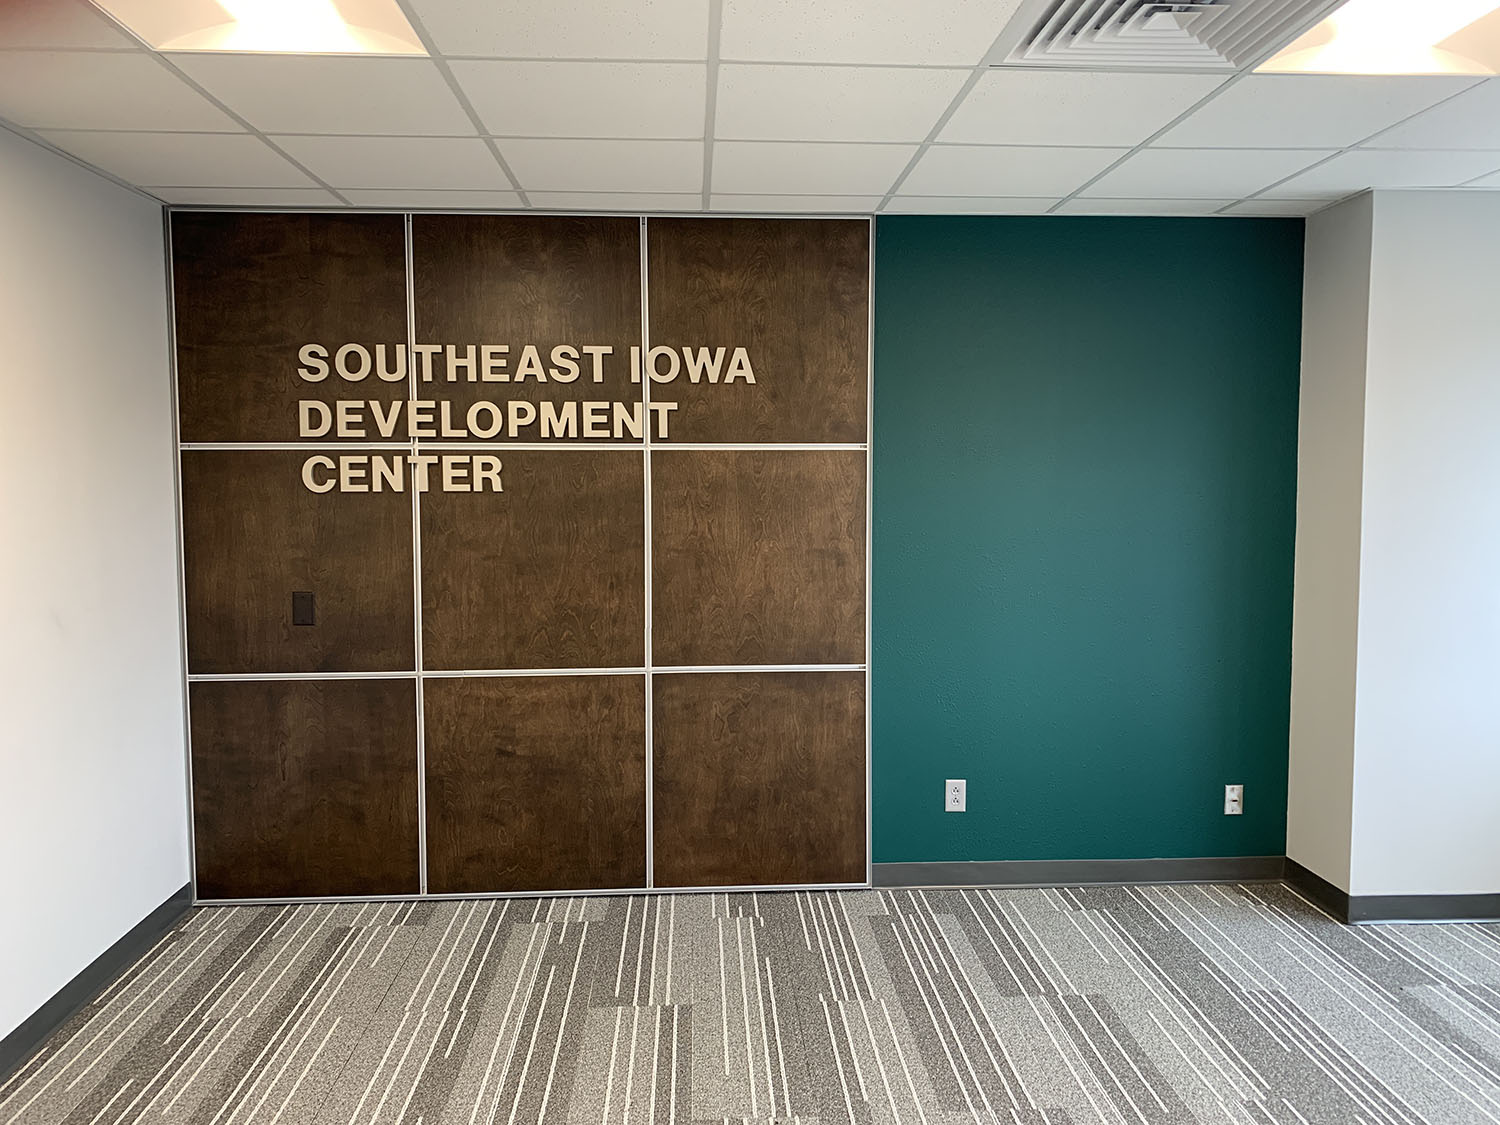 Southeast Iowa Development Center colored wall